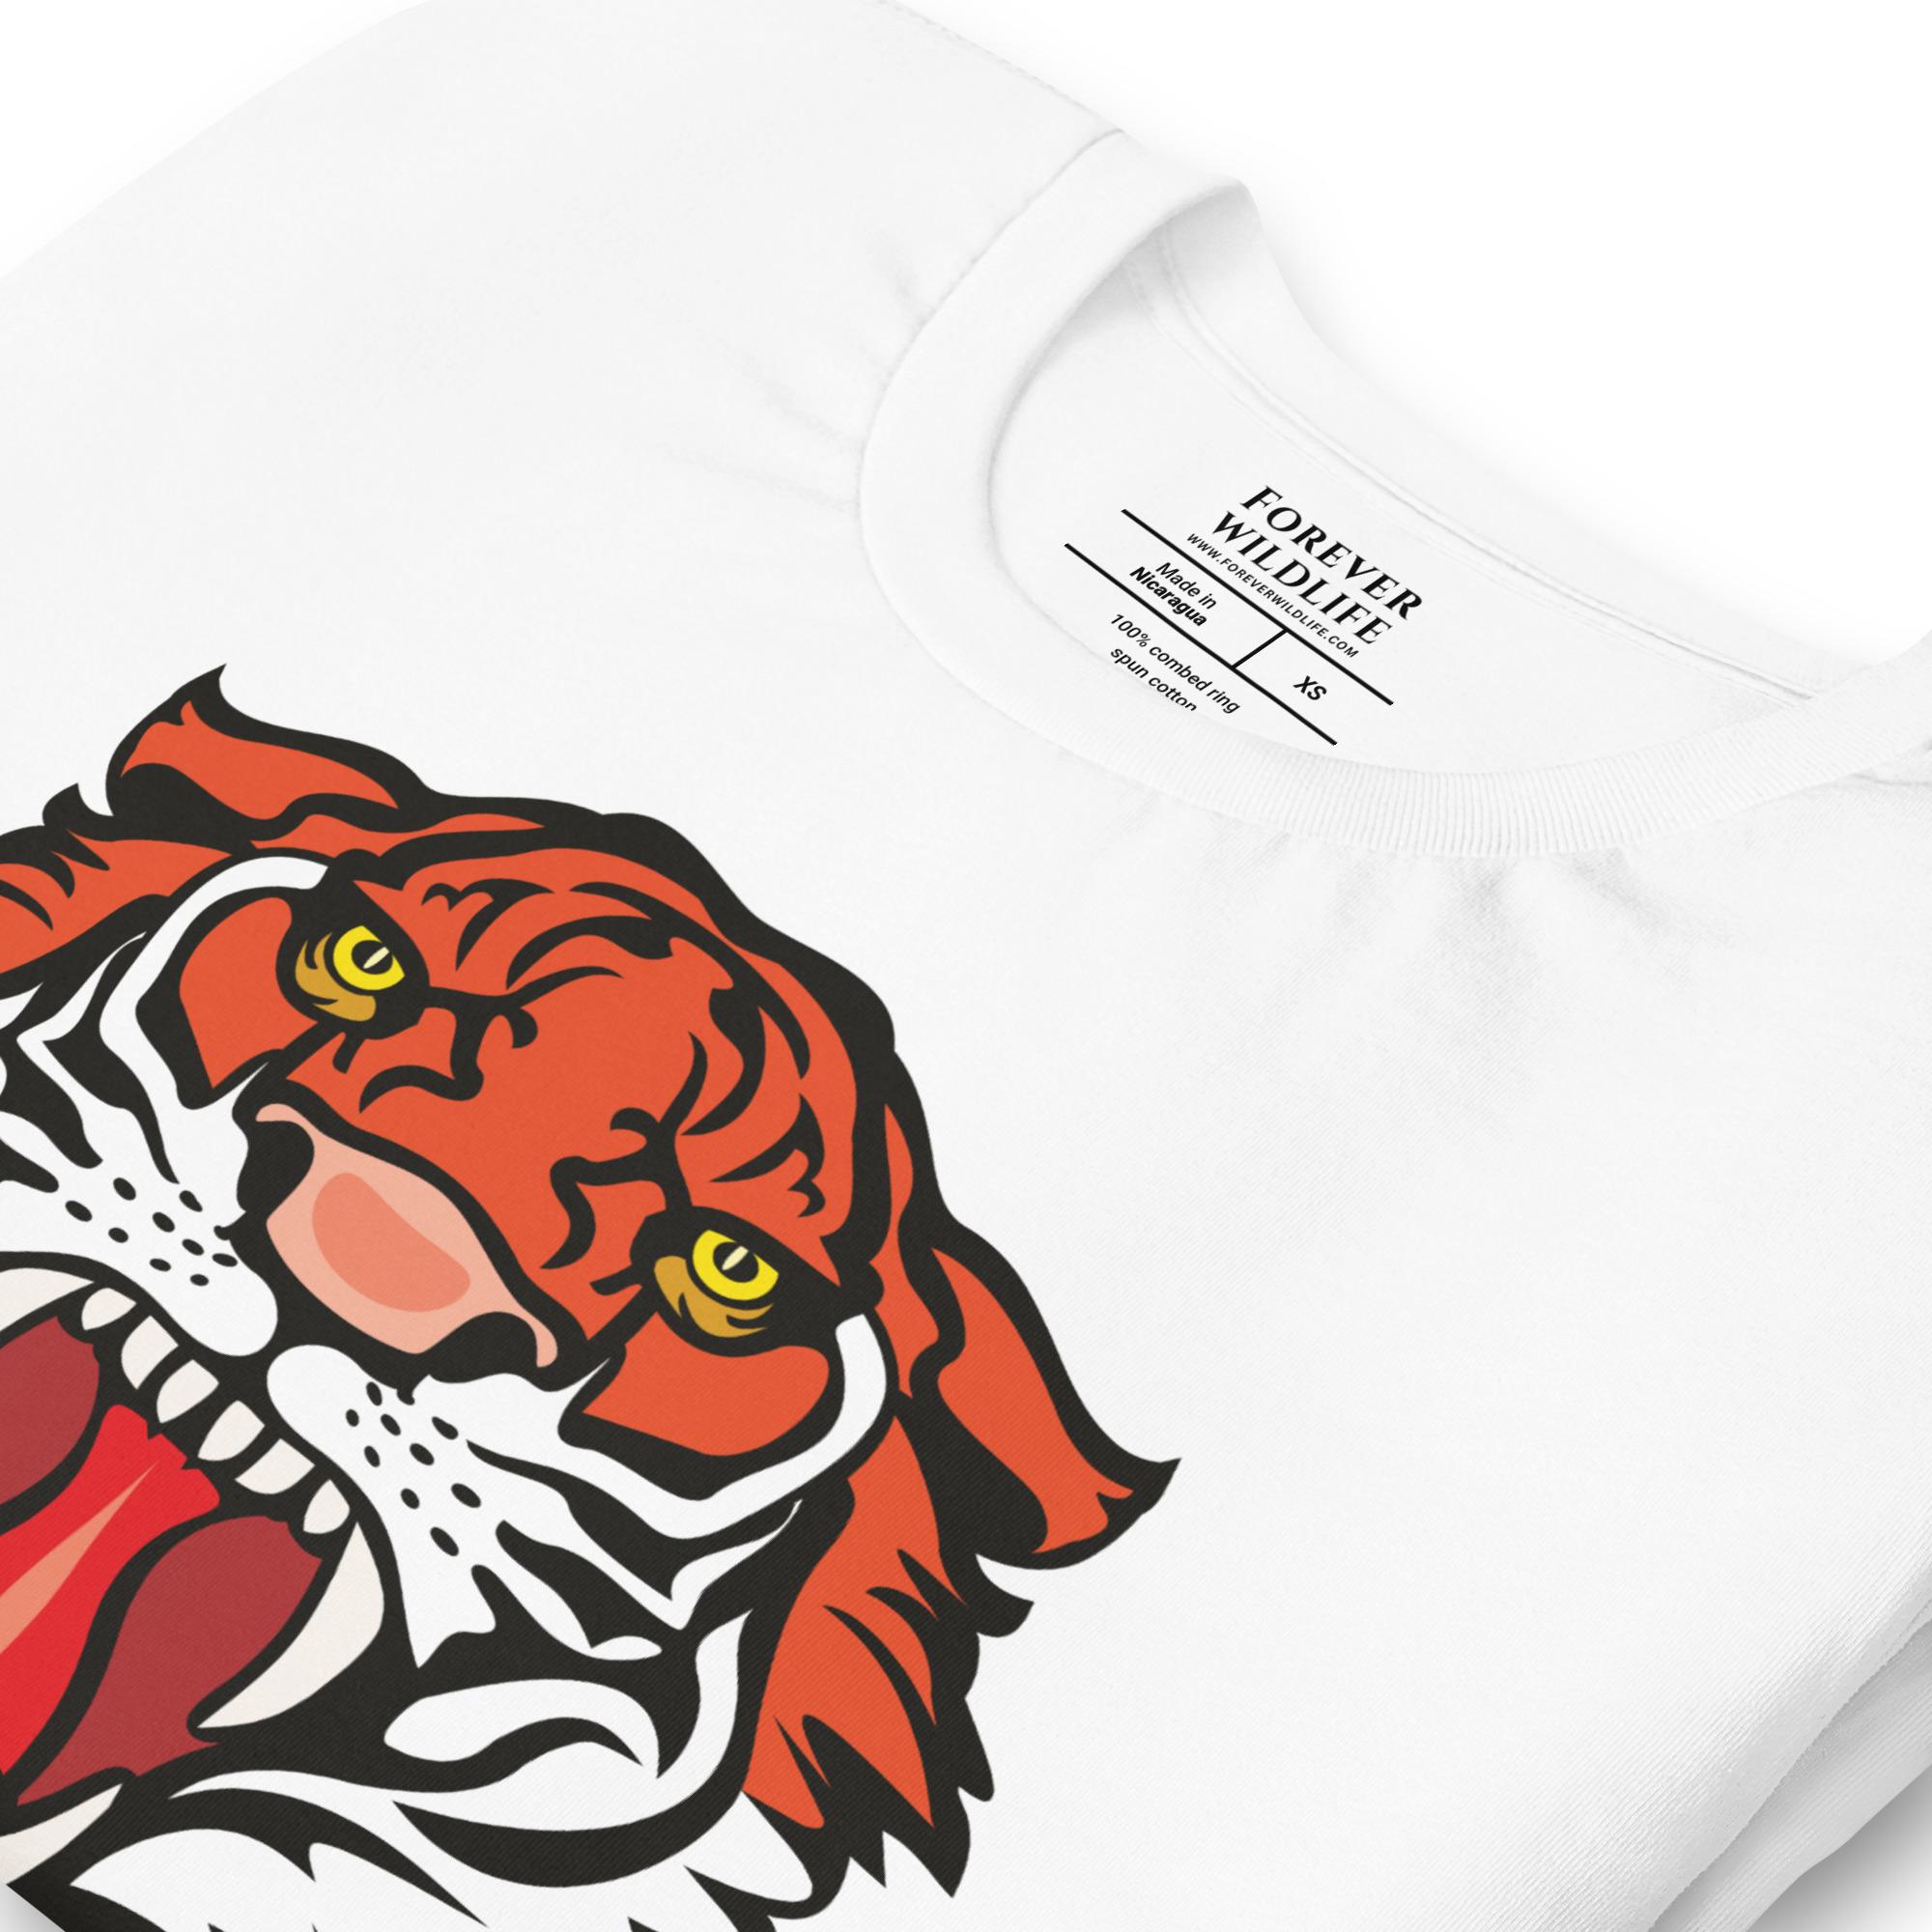 Tiger T-Shirt in White – Premium Wildlife T-Shirt Design, Wildlife Clothing & Apparel from Forever Wildlife